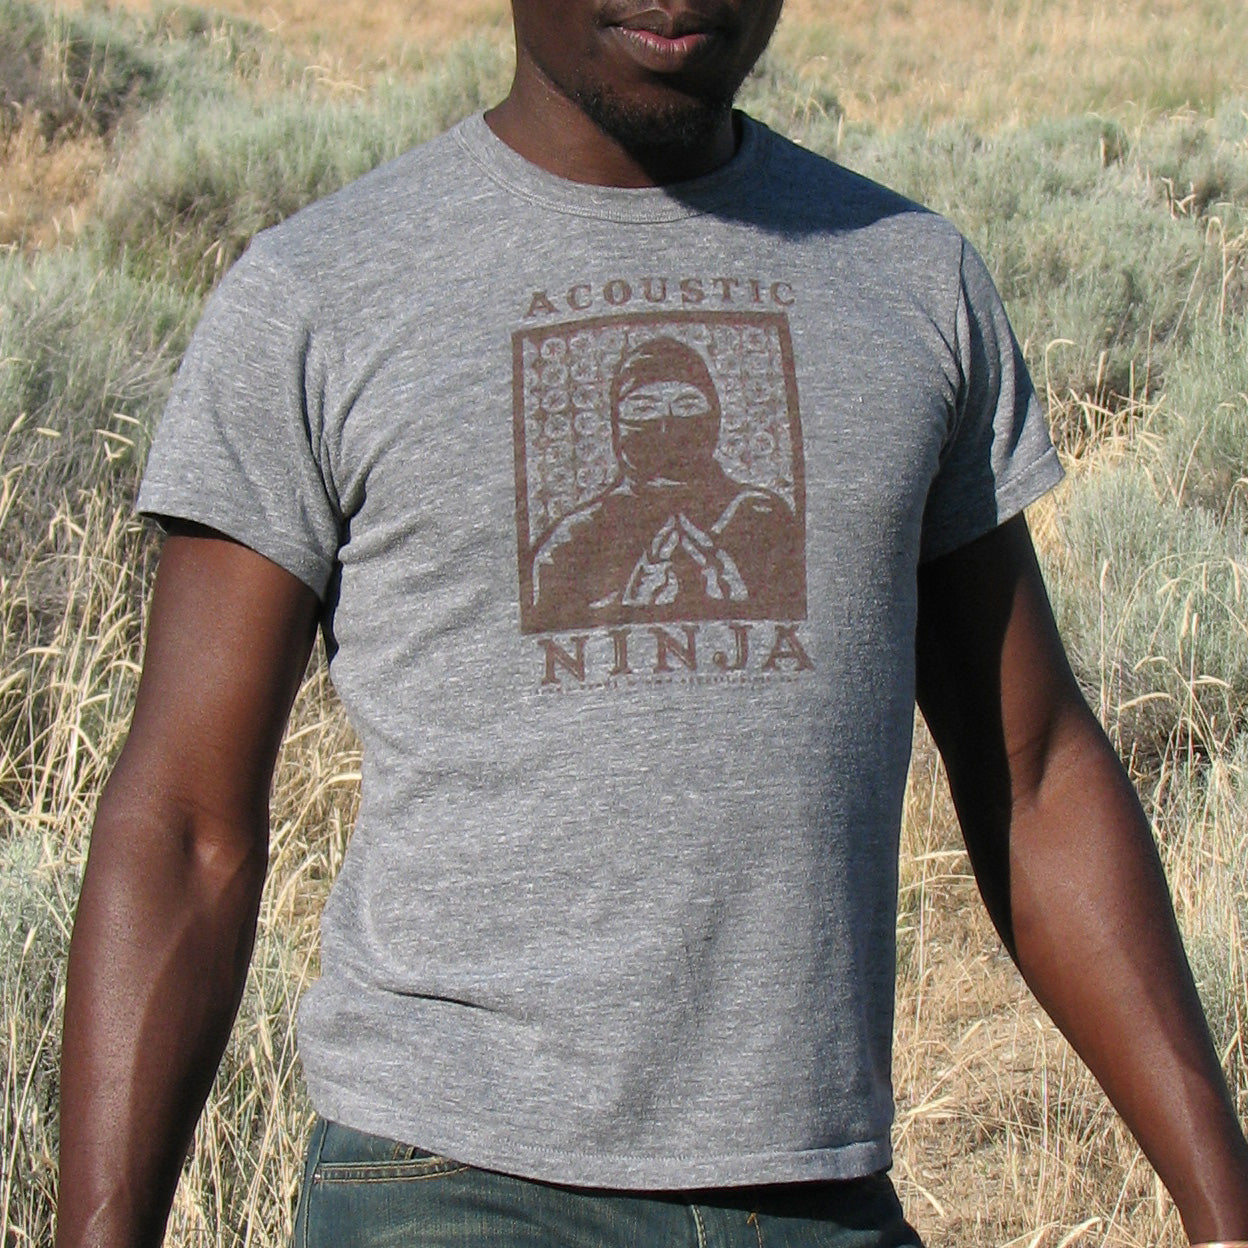 T-shirt: ACOUSTIC NINJA - Unisex Shirt